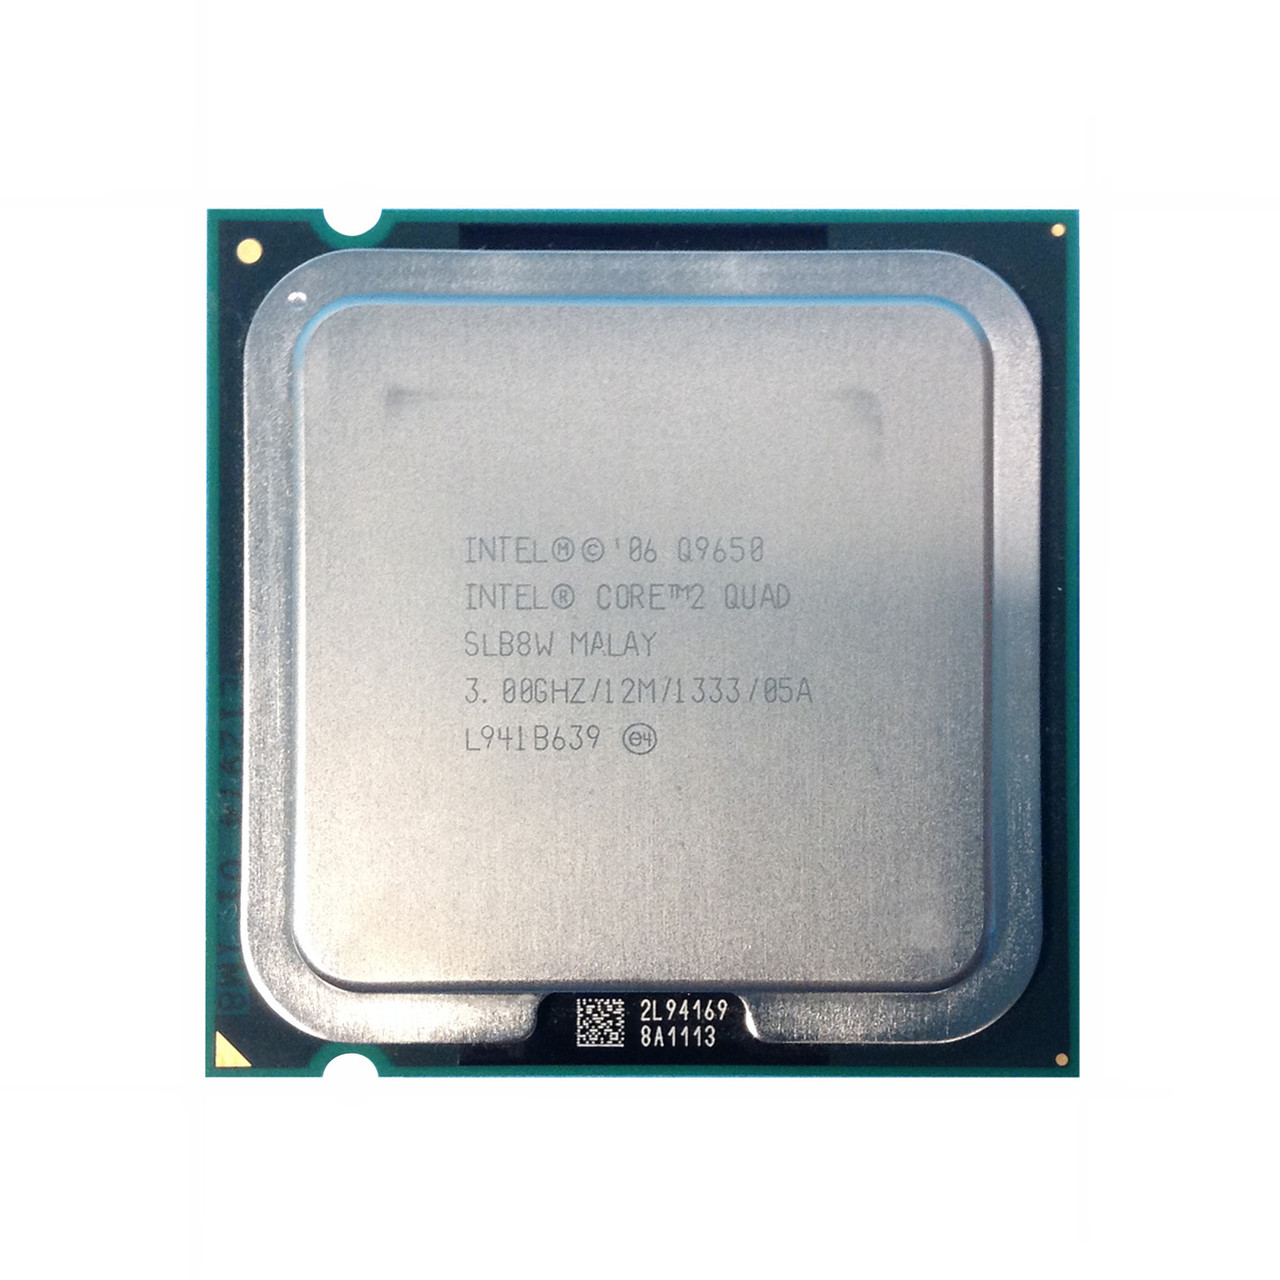 Intel SLB8W | Core 2 Quad Q9650 3.0GHz 12M 1333MHz Processor - Serverworlds